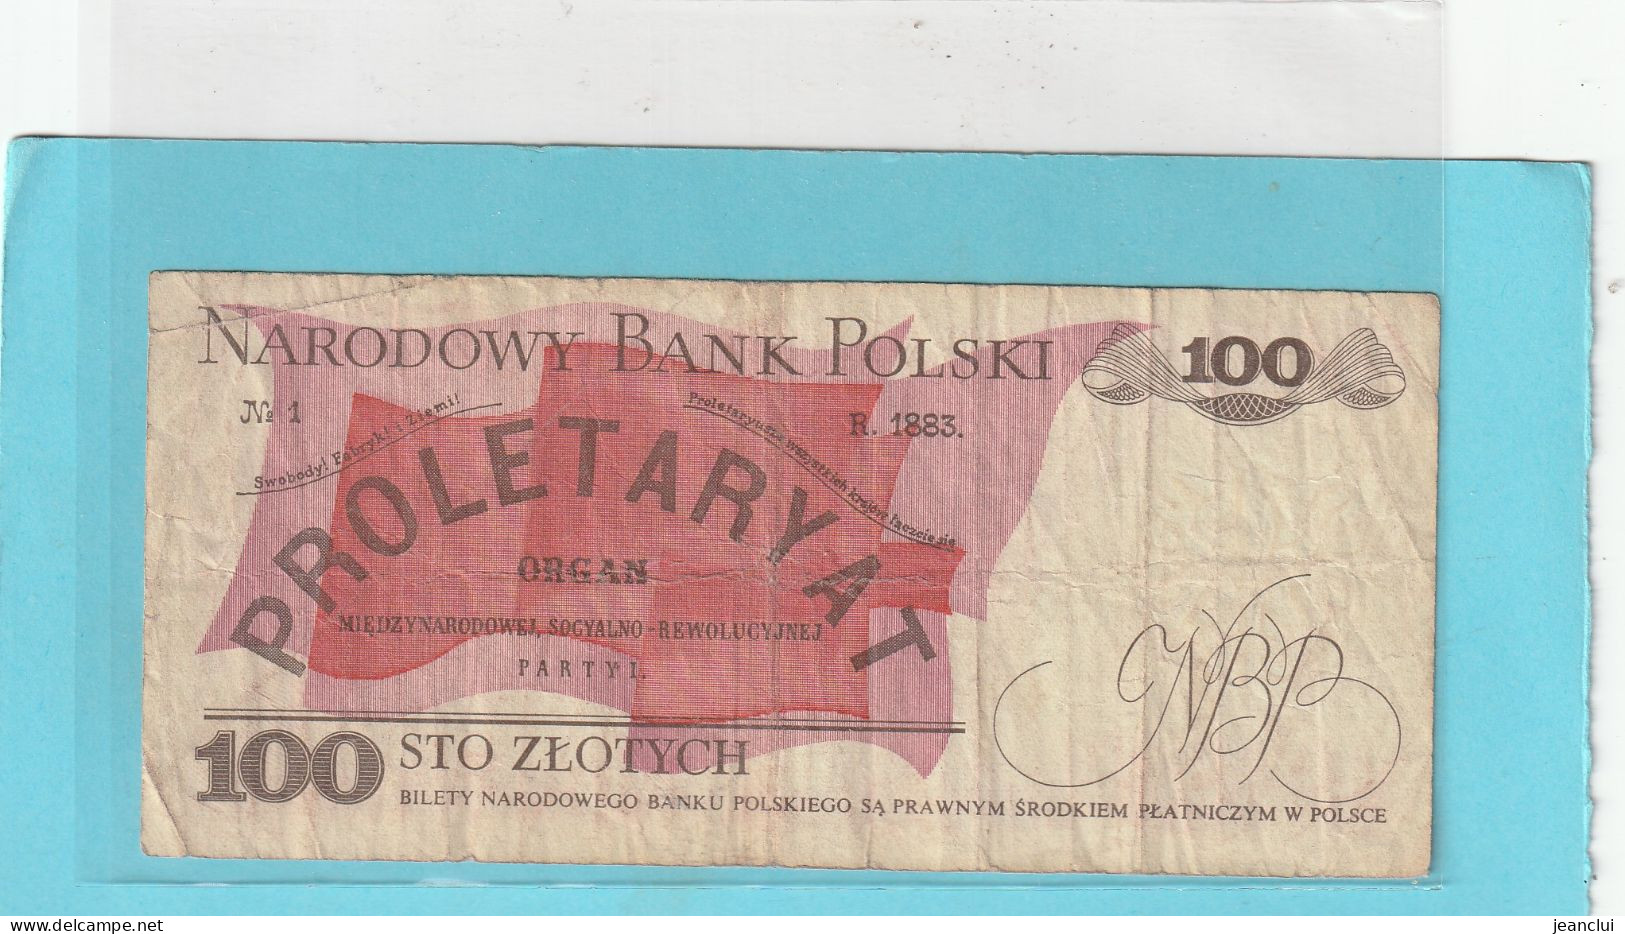 NARODOWY BANK POLSKI . 100 ZLOTYCH .  1-12-1988 .  N° RH 7104371 .  2 SCANNES - Pologne